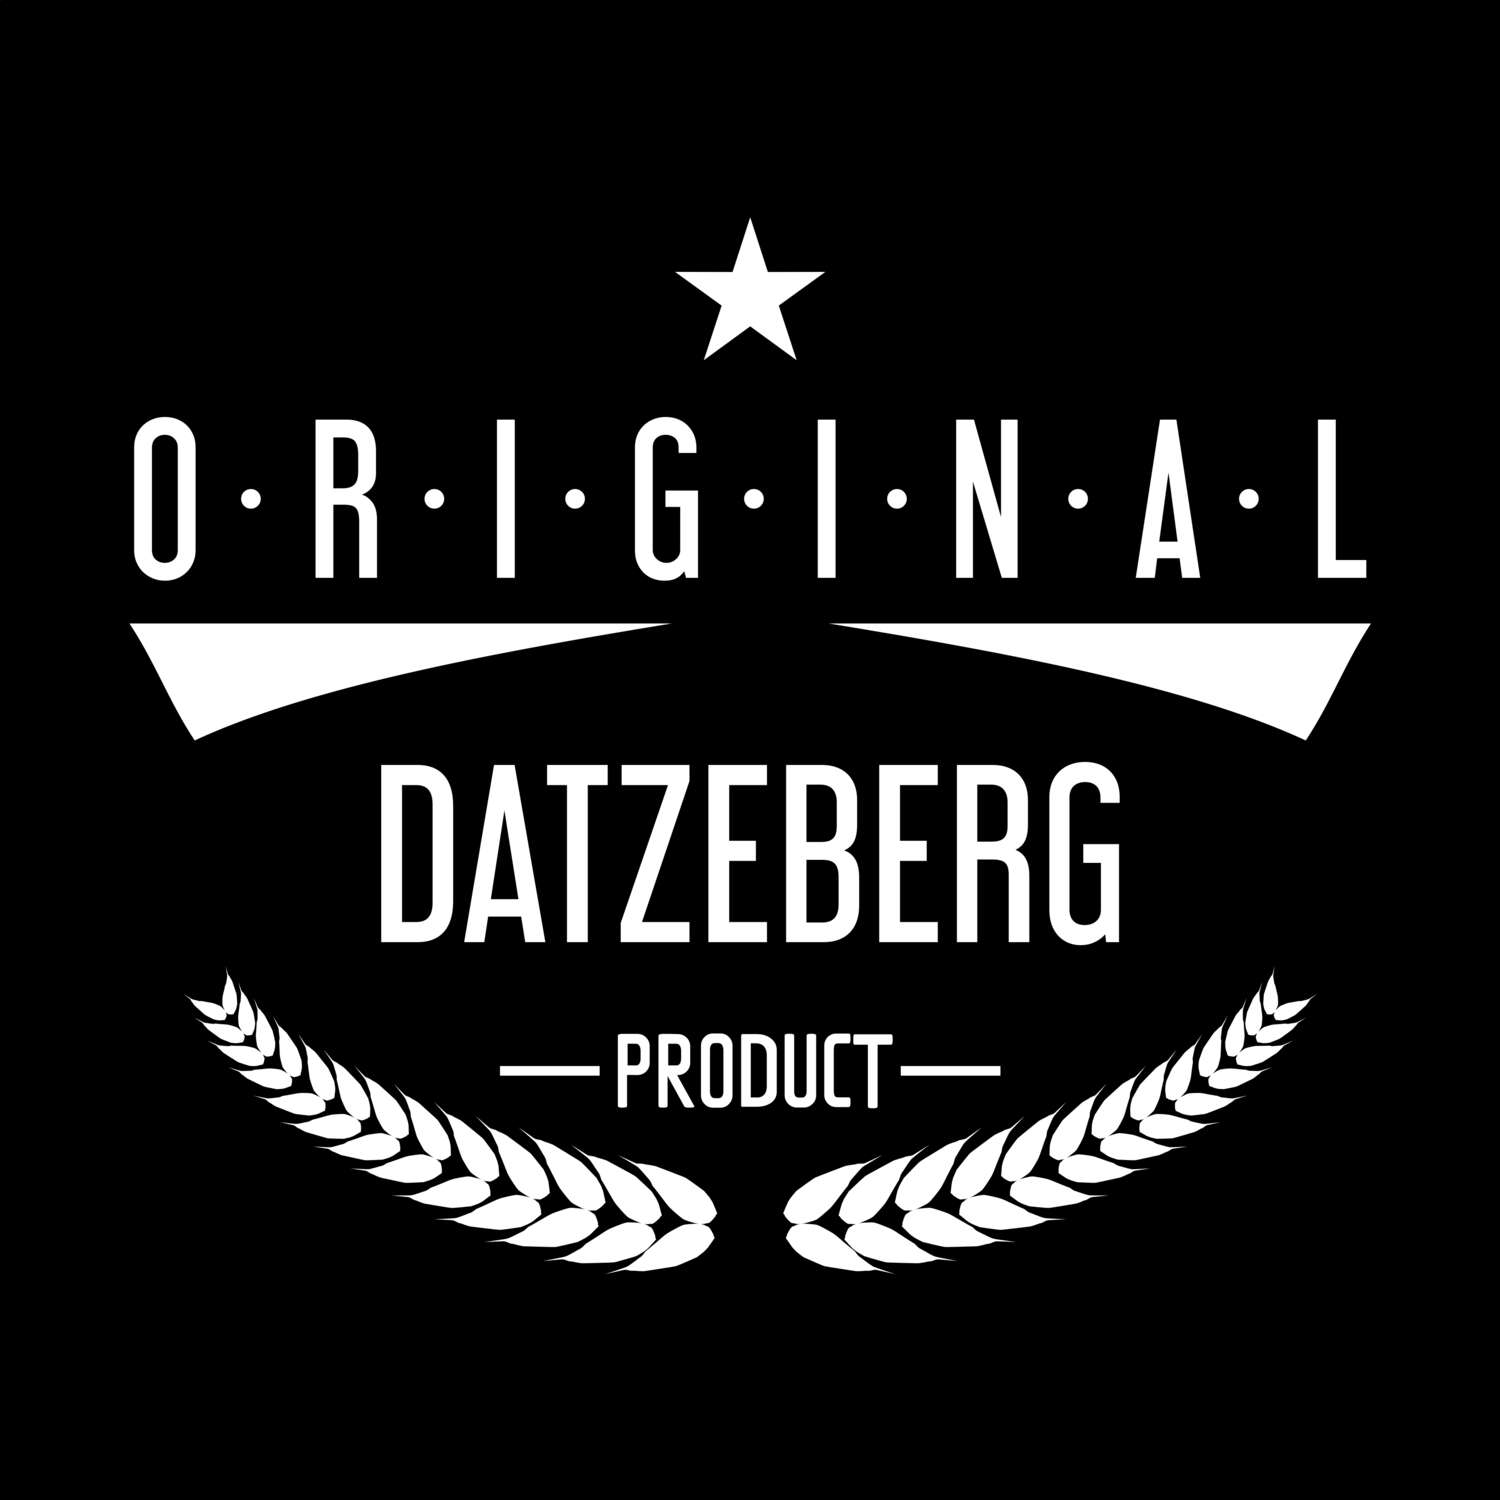 Datzeberg T-Shirt »Original Product«